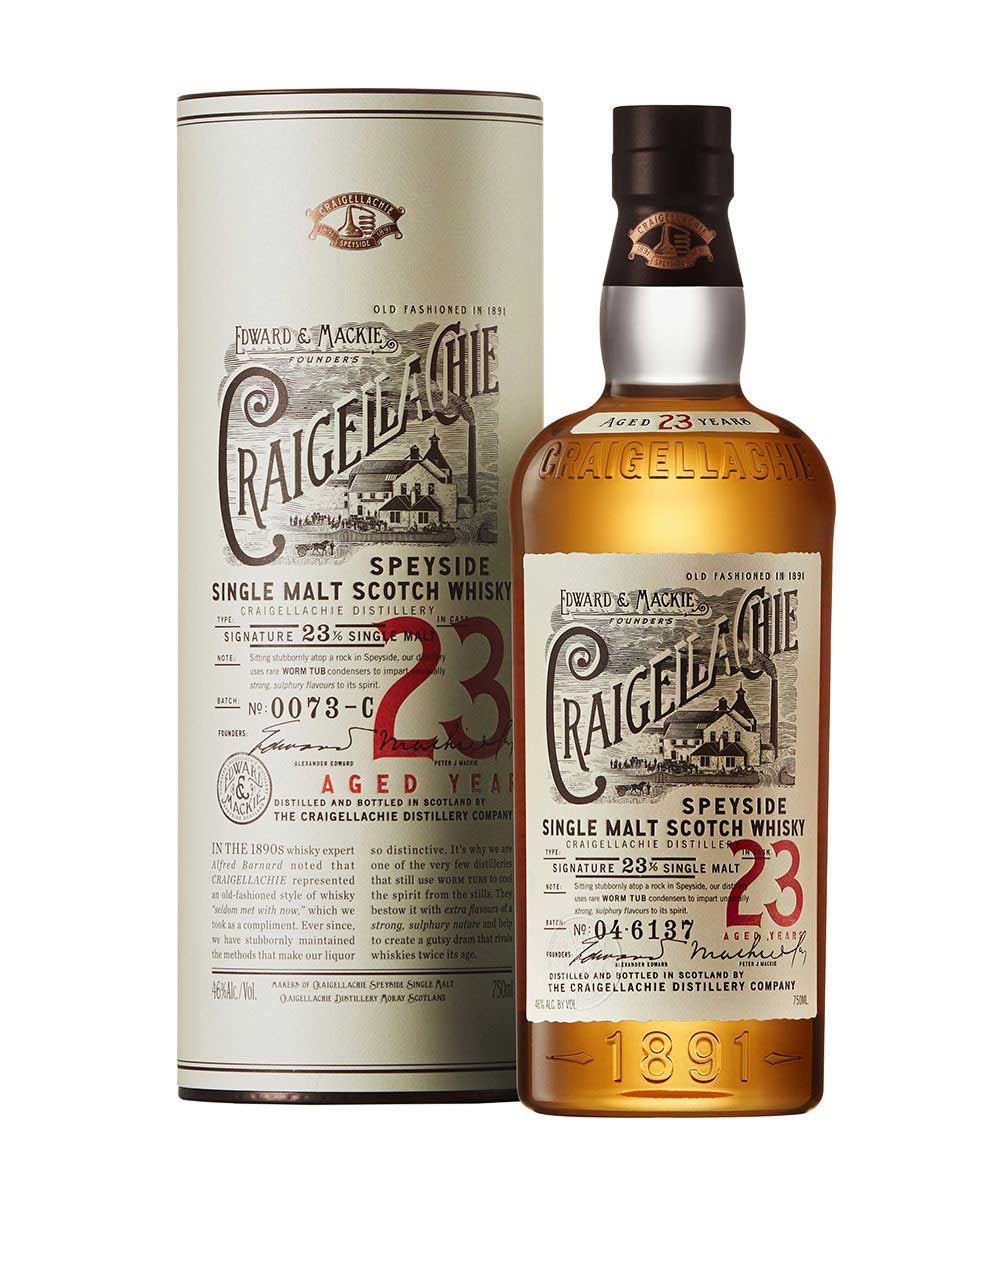 Glenfiddich Bourbon Barrel Reserve 14 Year Old Single Malt Scotch Whisky